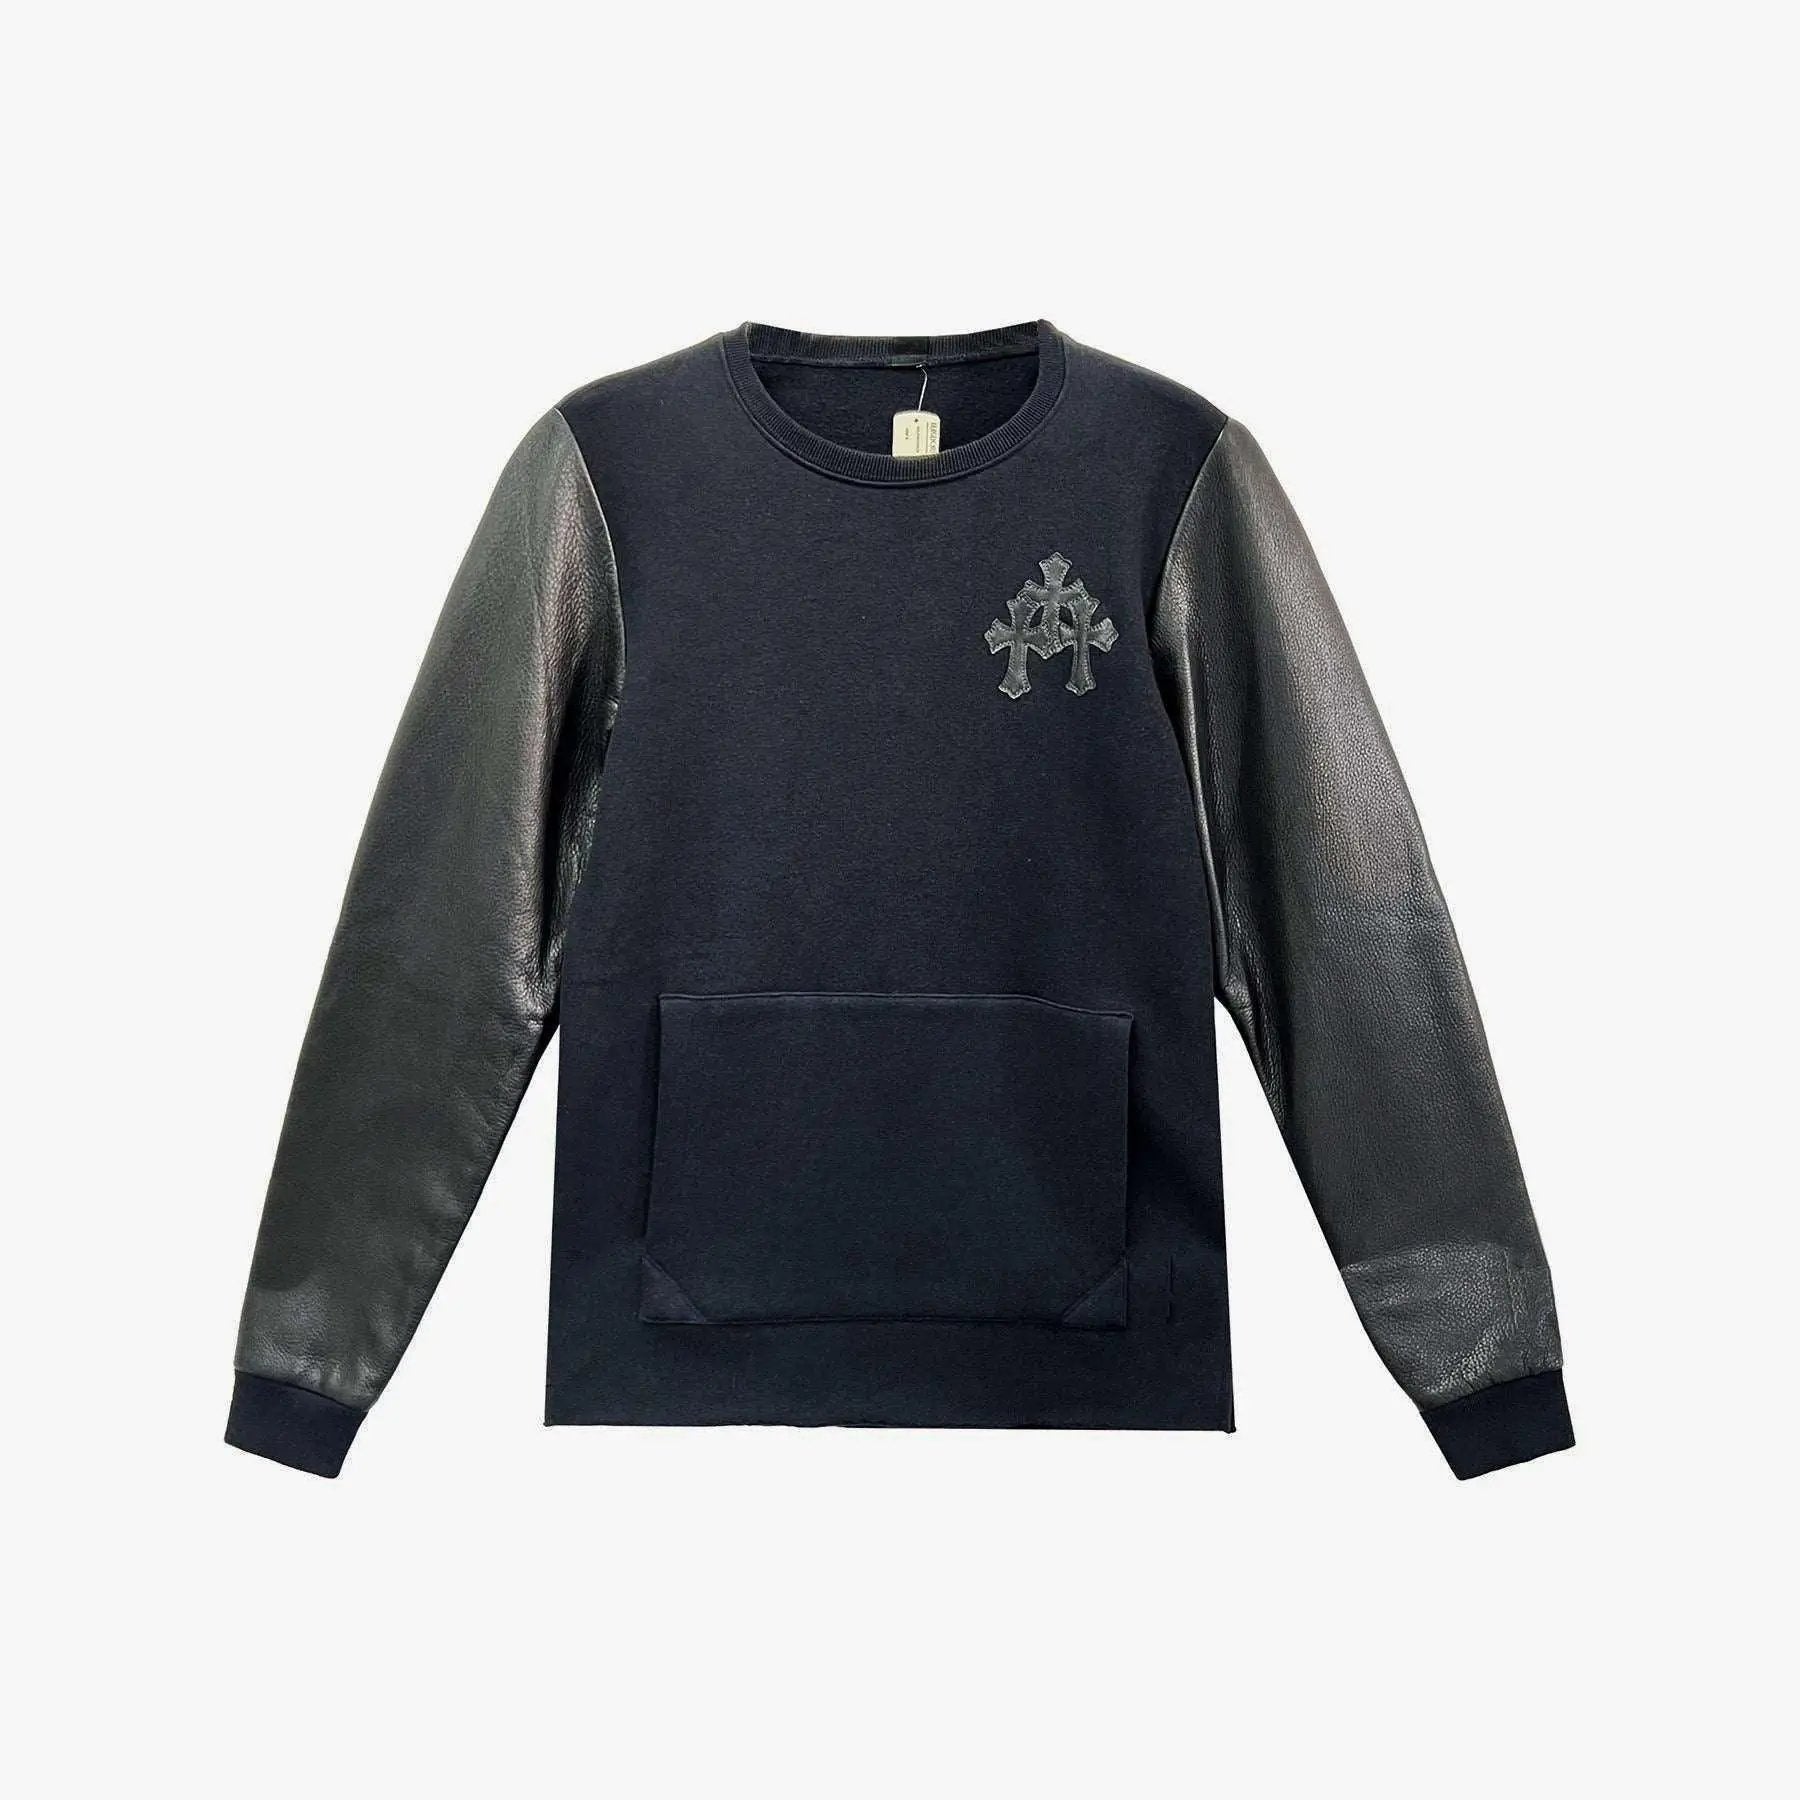 Chrome Hearts Black Leather Cross & Leather Sleeve Sweatshirt - SHENGLI ROAD MARKET